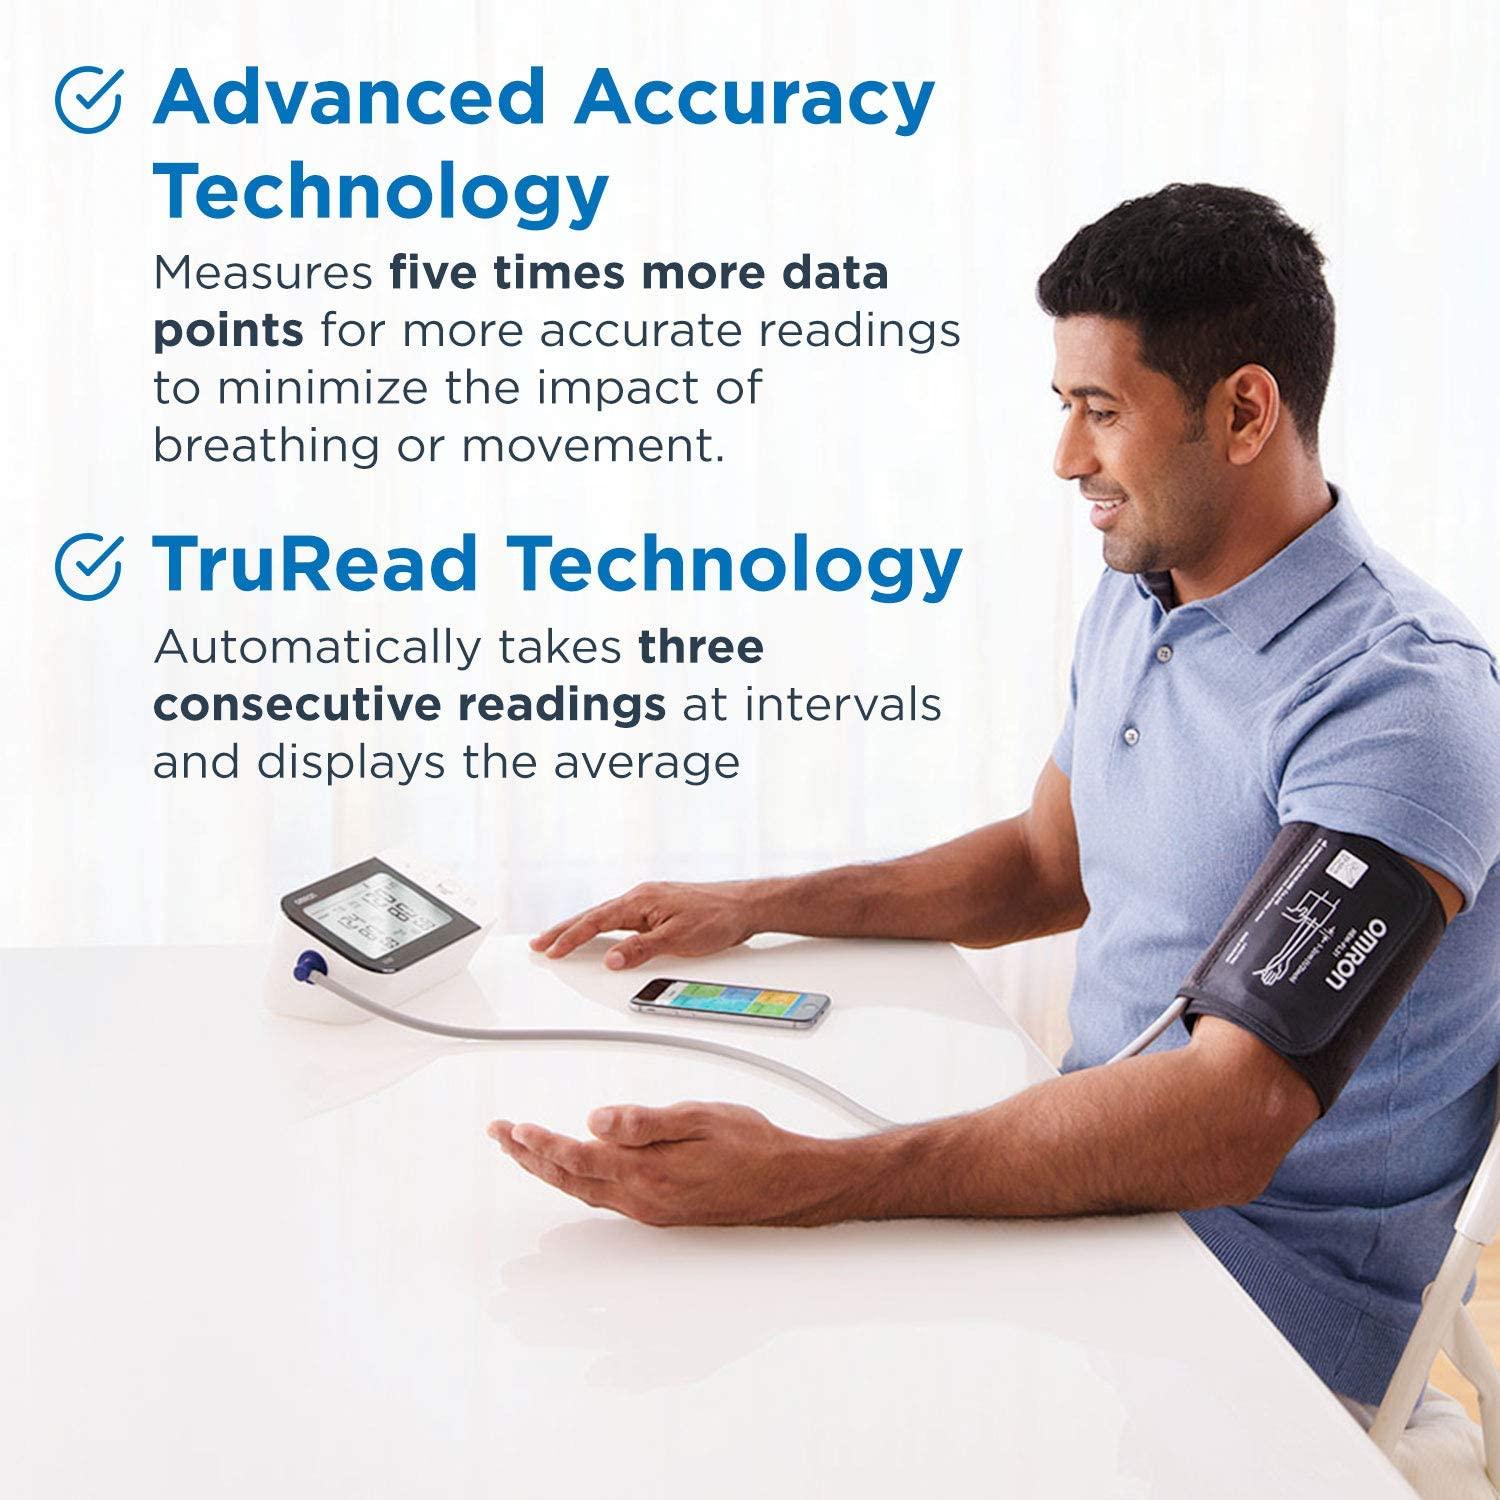 Buy Omron Gold Wireless Upper Arm Blood Pressure Monitor online Worldwide 